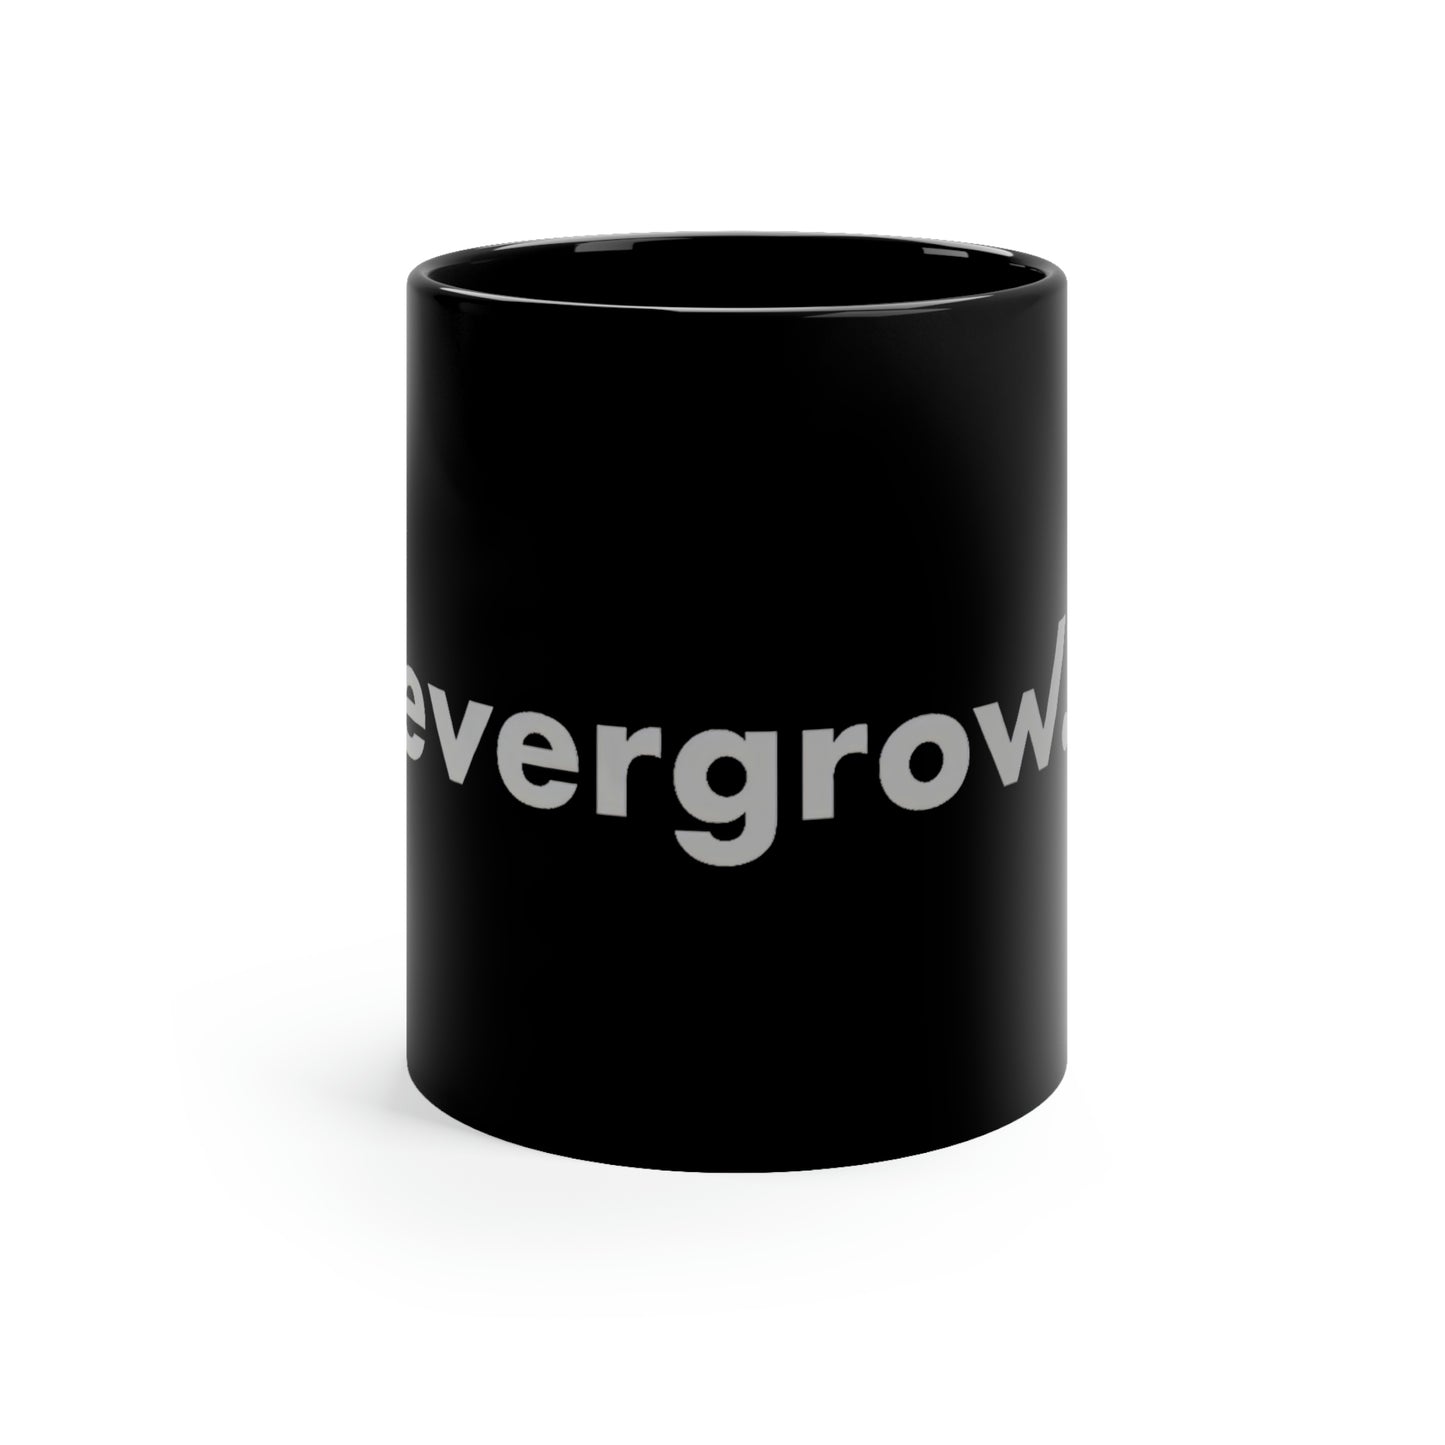 USA - 11oz Black Mug with evergrow in gray